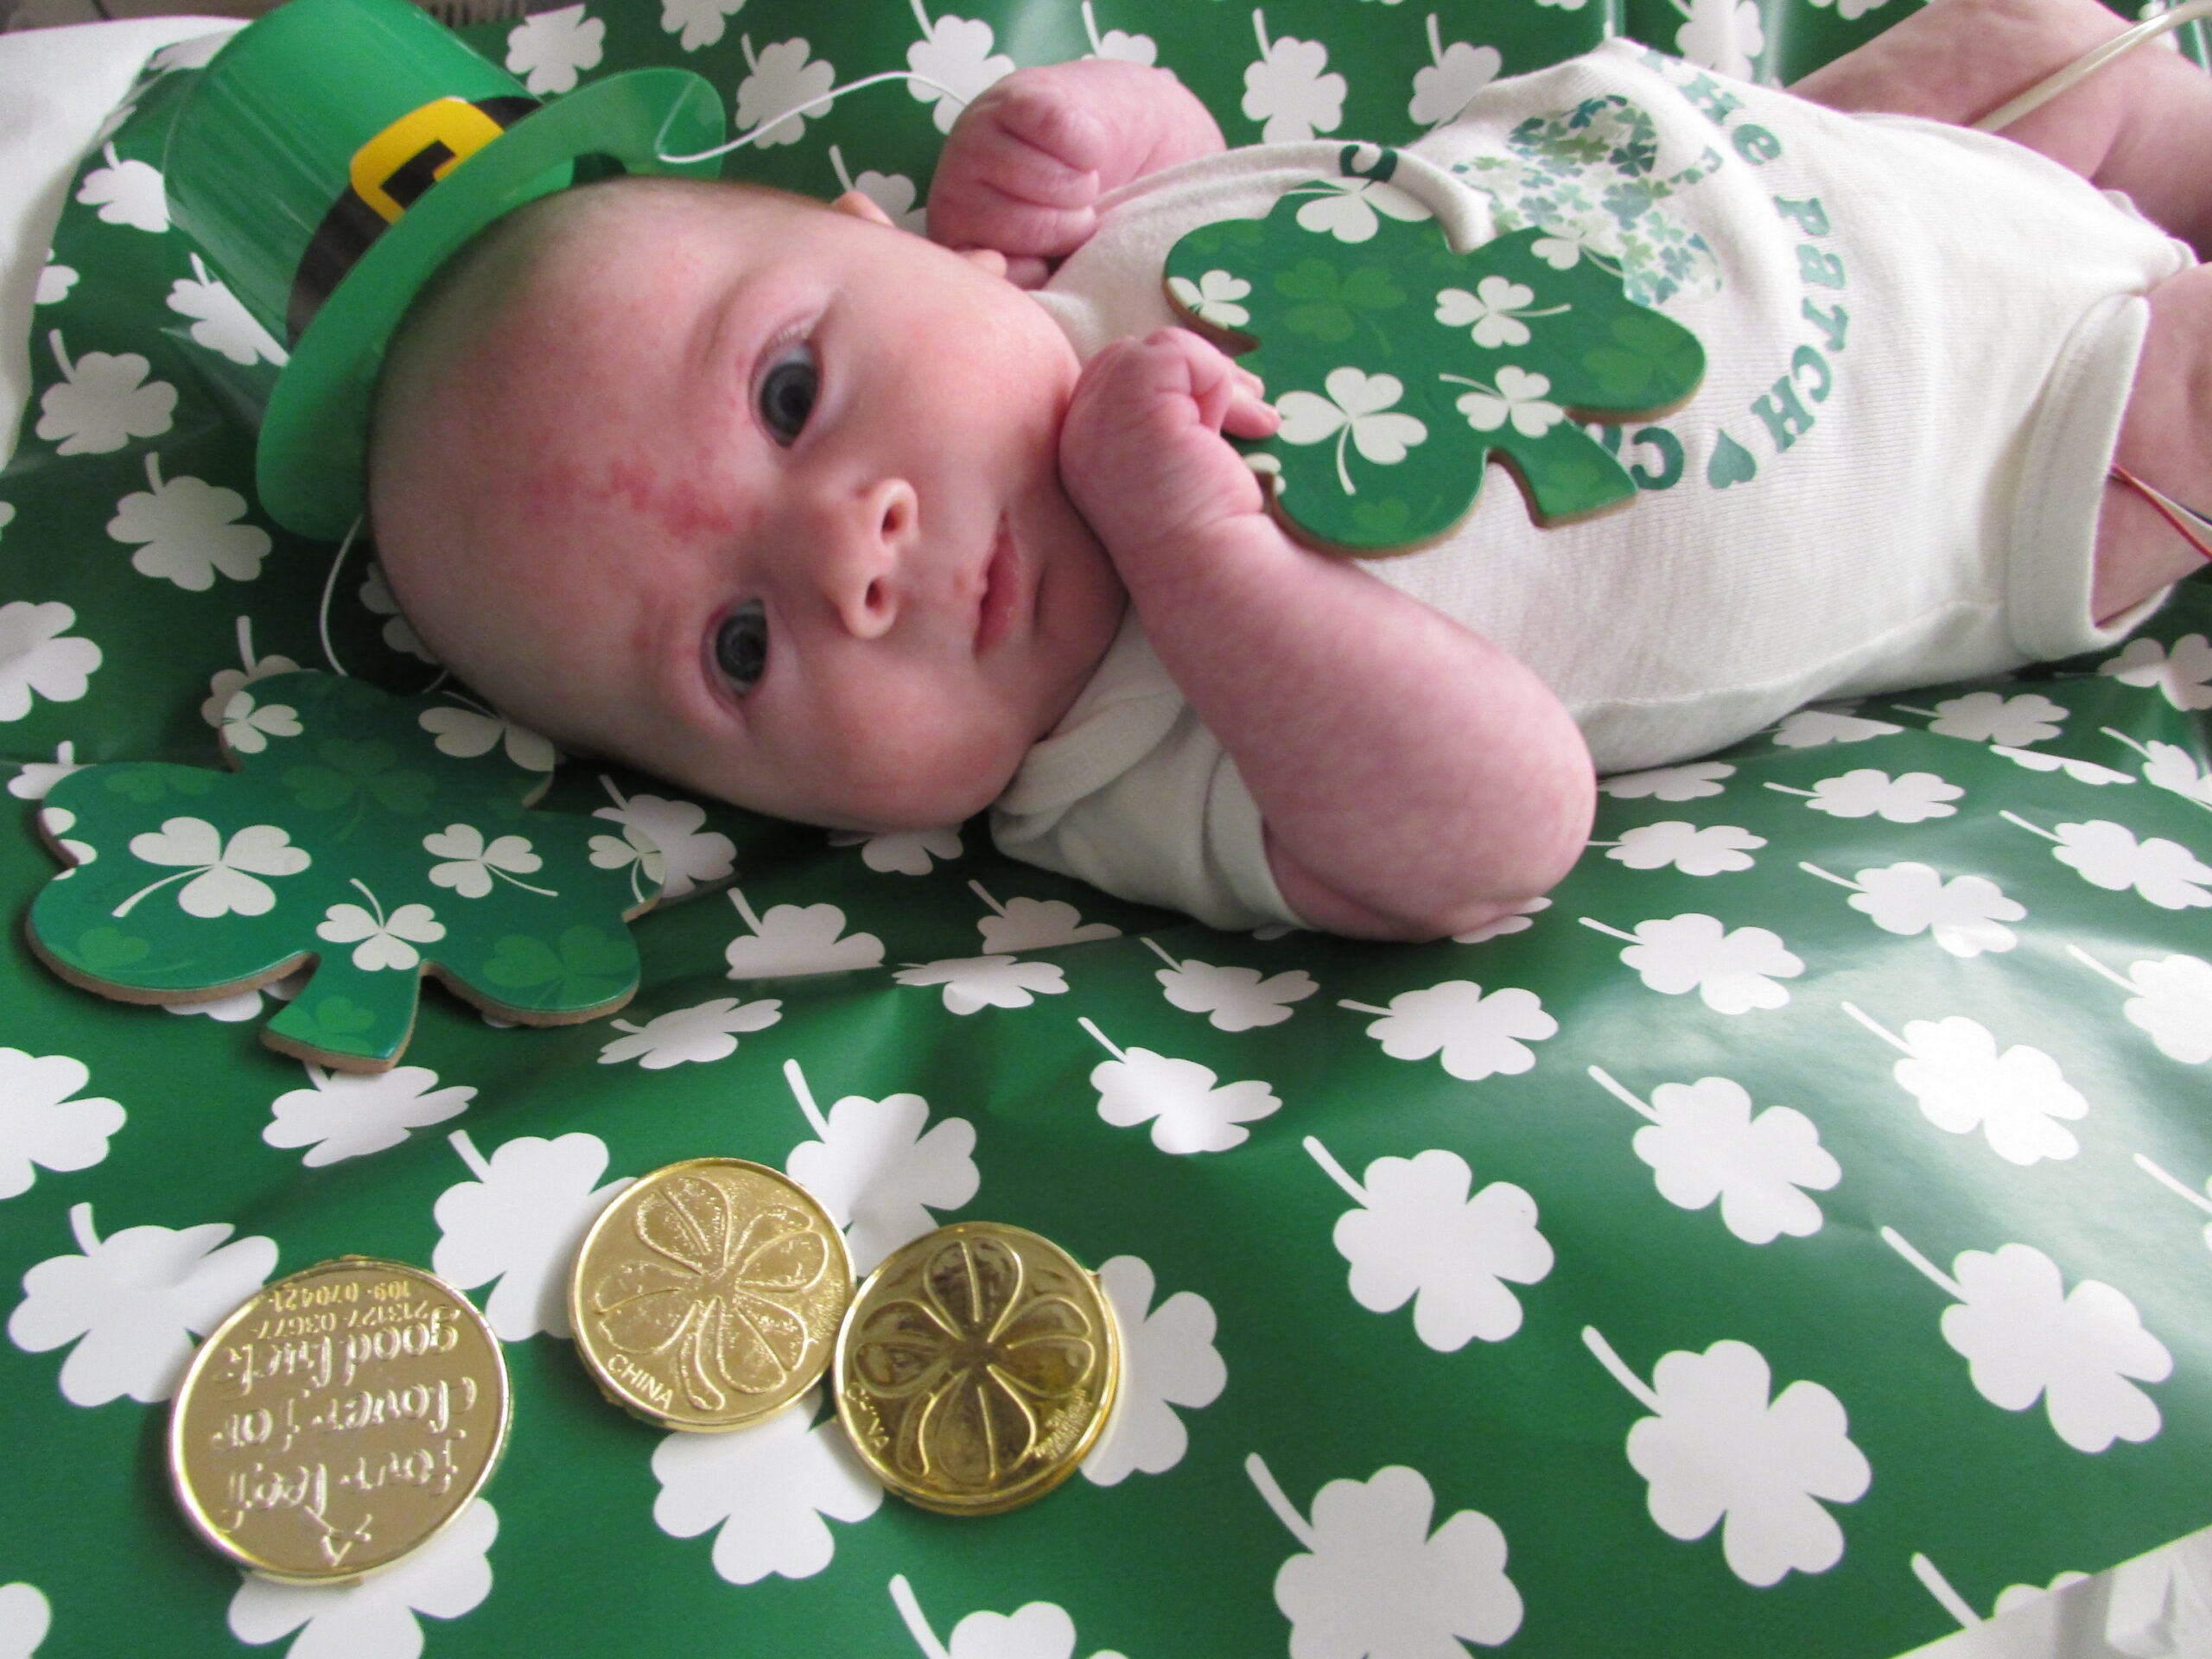 Tufts Medical Center NICU Babies Celebrate St. Patrick's Day